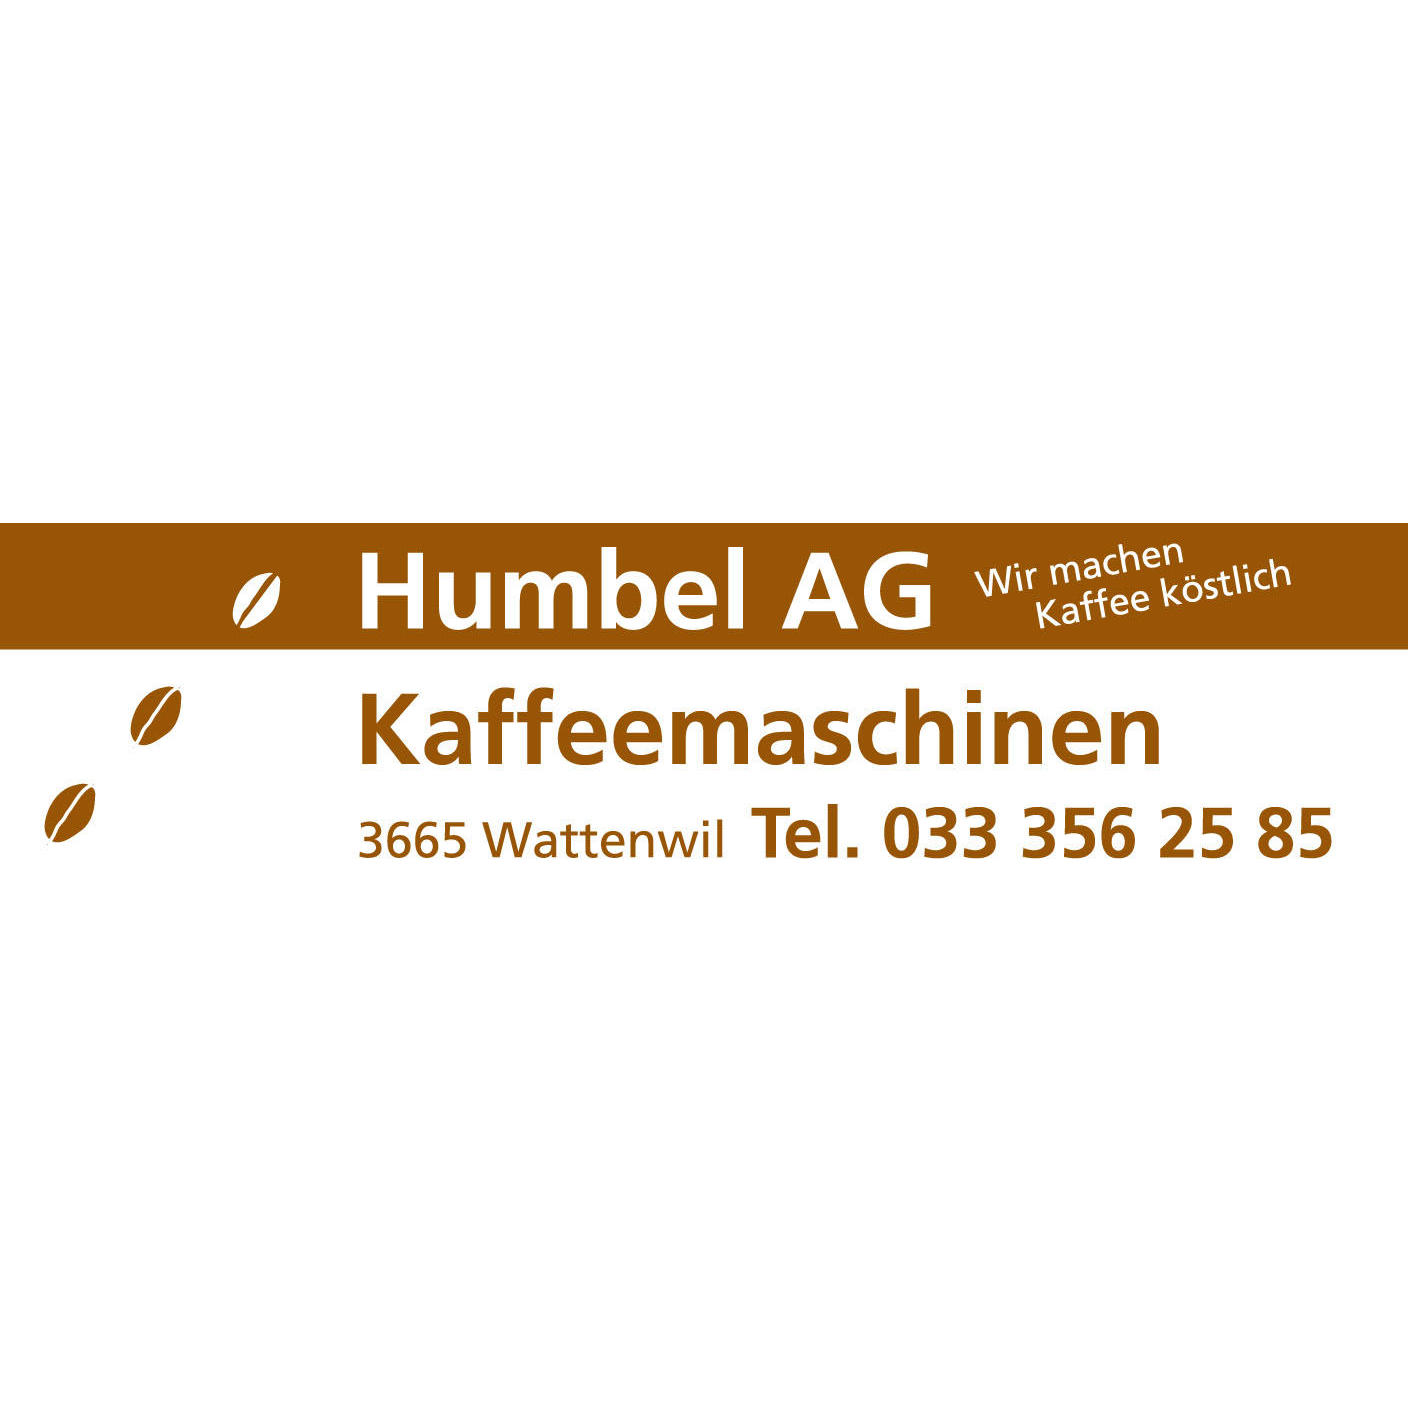 Humbel AG Kaffeemaschinen Logo